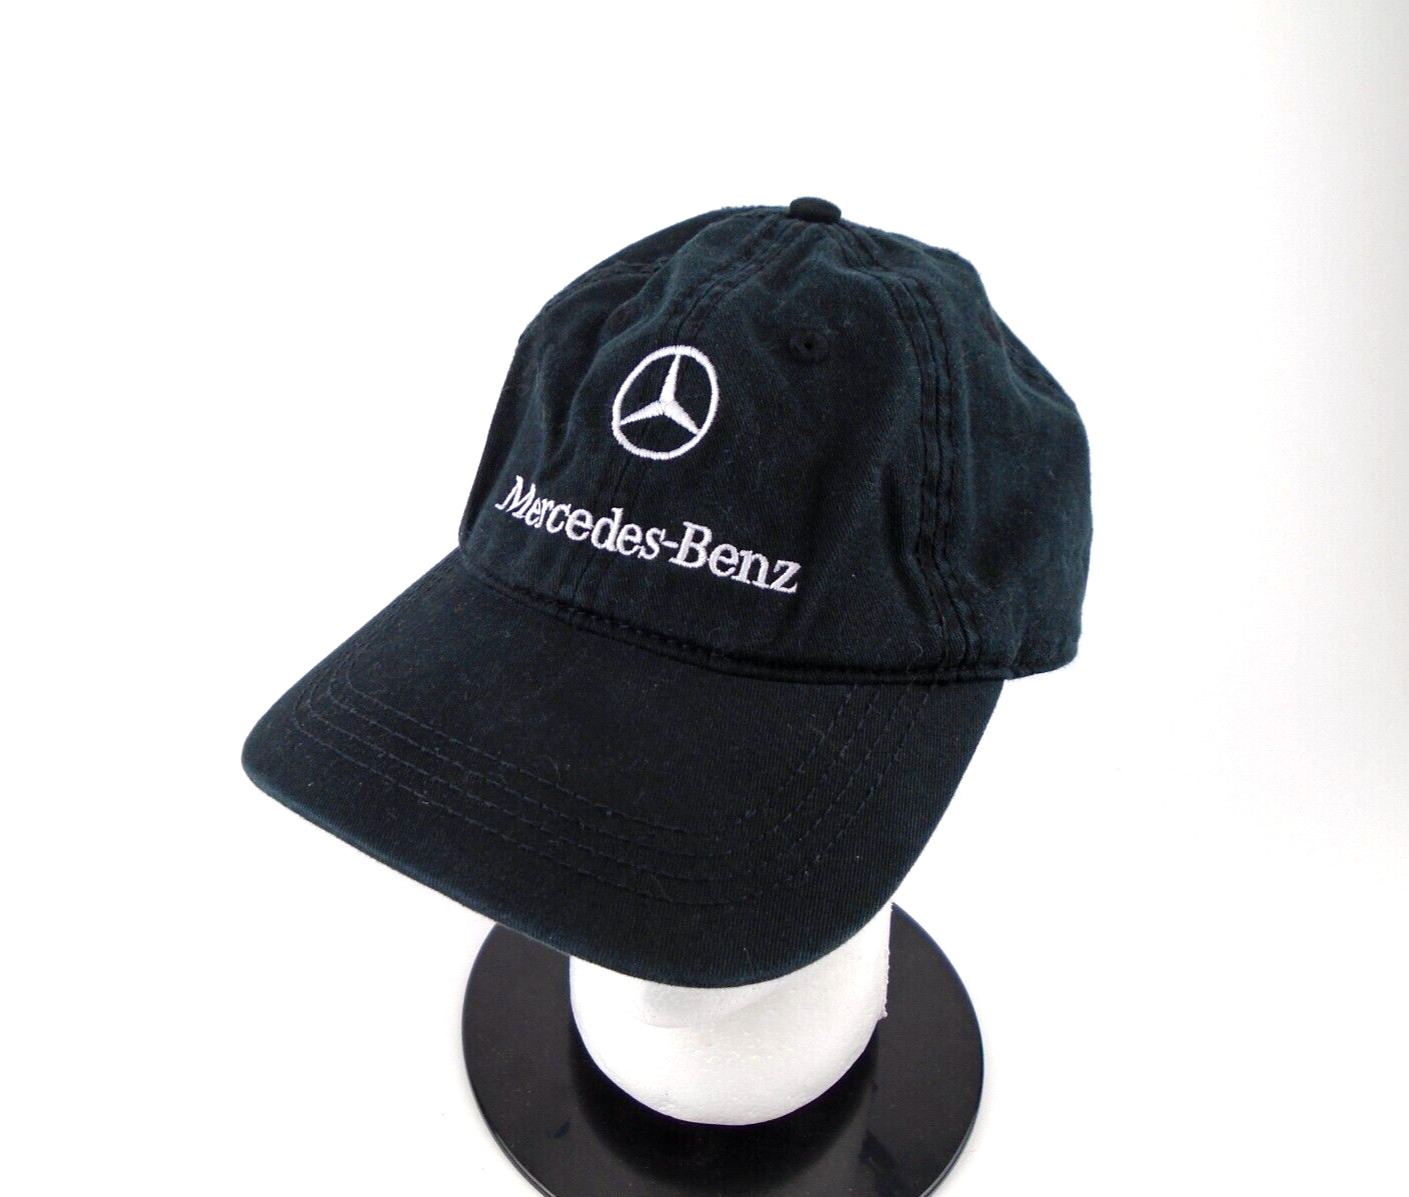 Mercedes Benz Hat Made By Cap America Strapback Black White Emblem